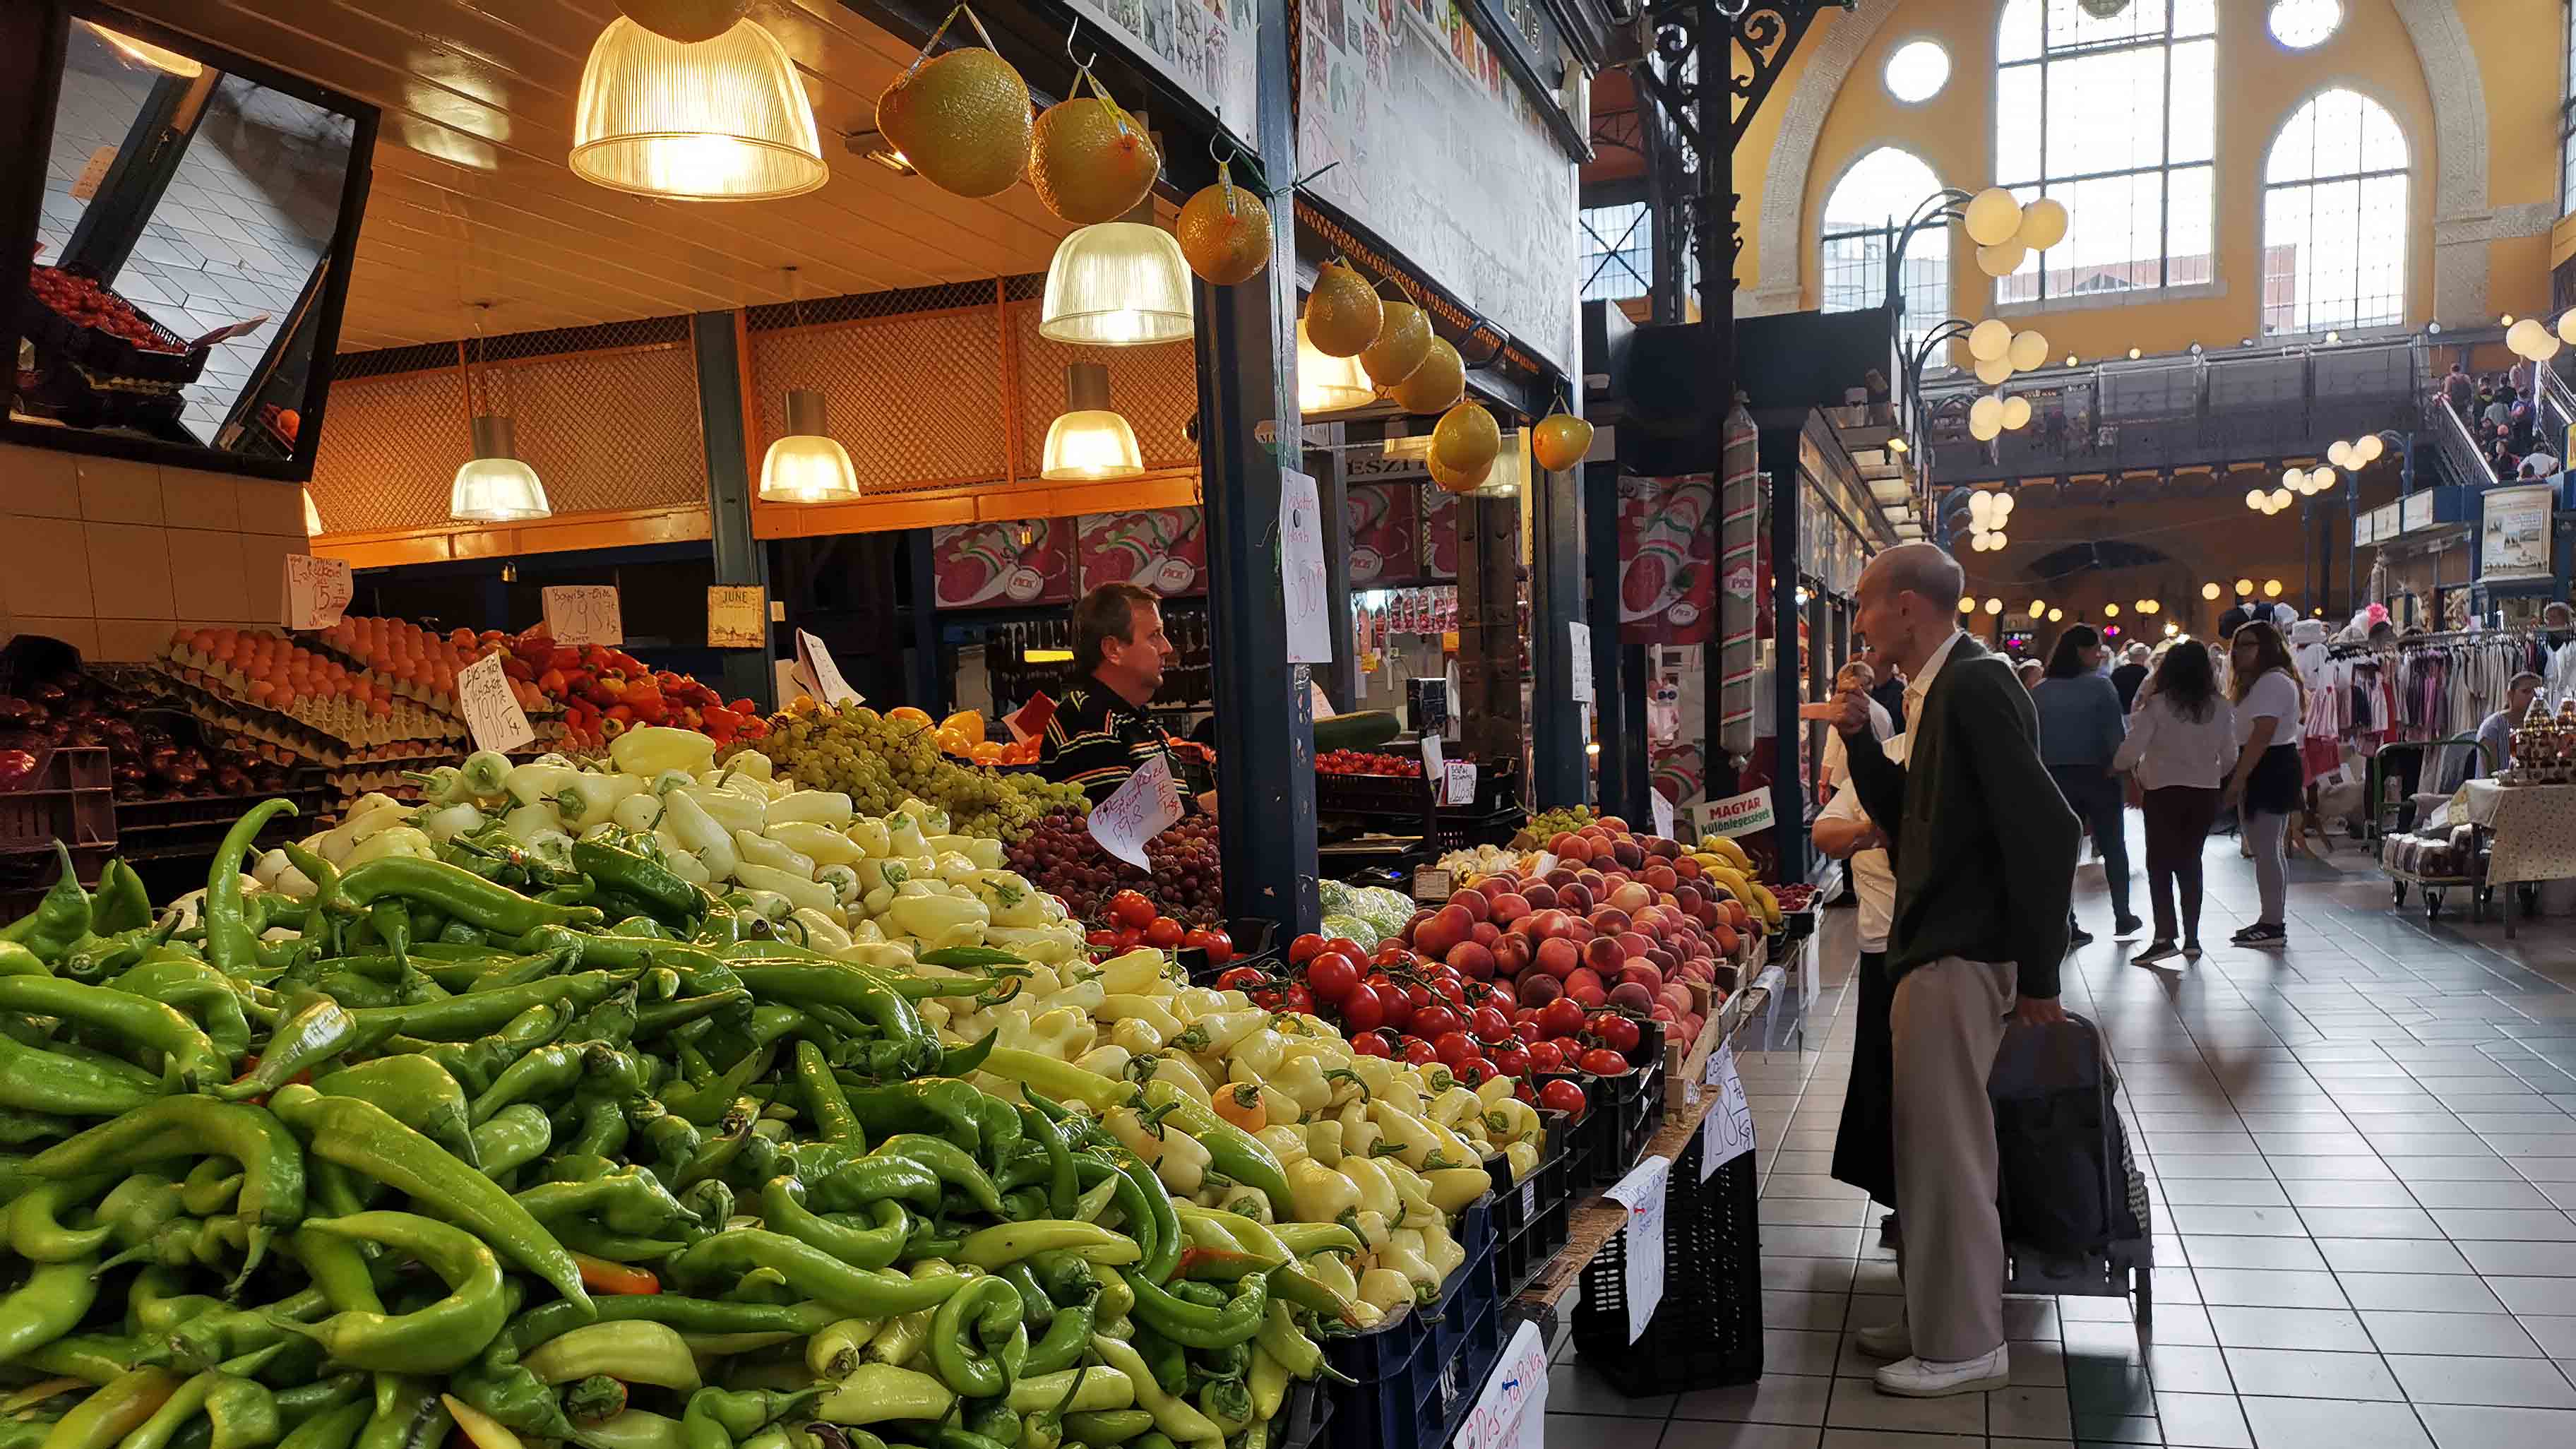 Grande mercato coperto Budapest Fővám tér commercio di frutta e verdura